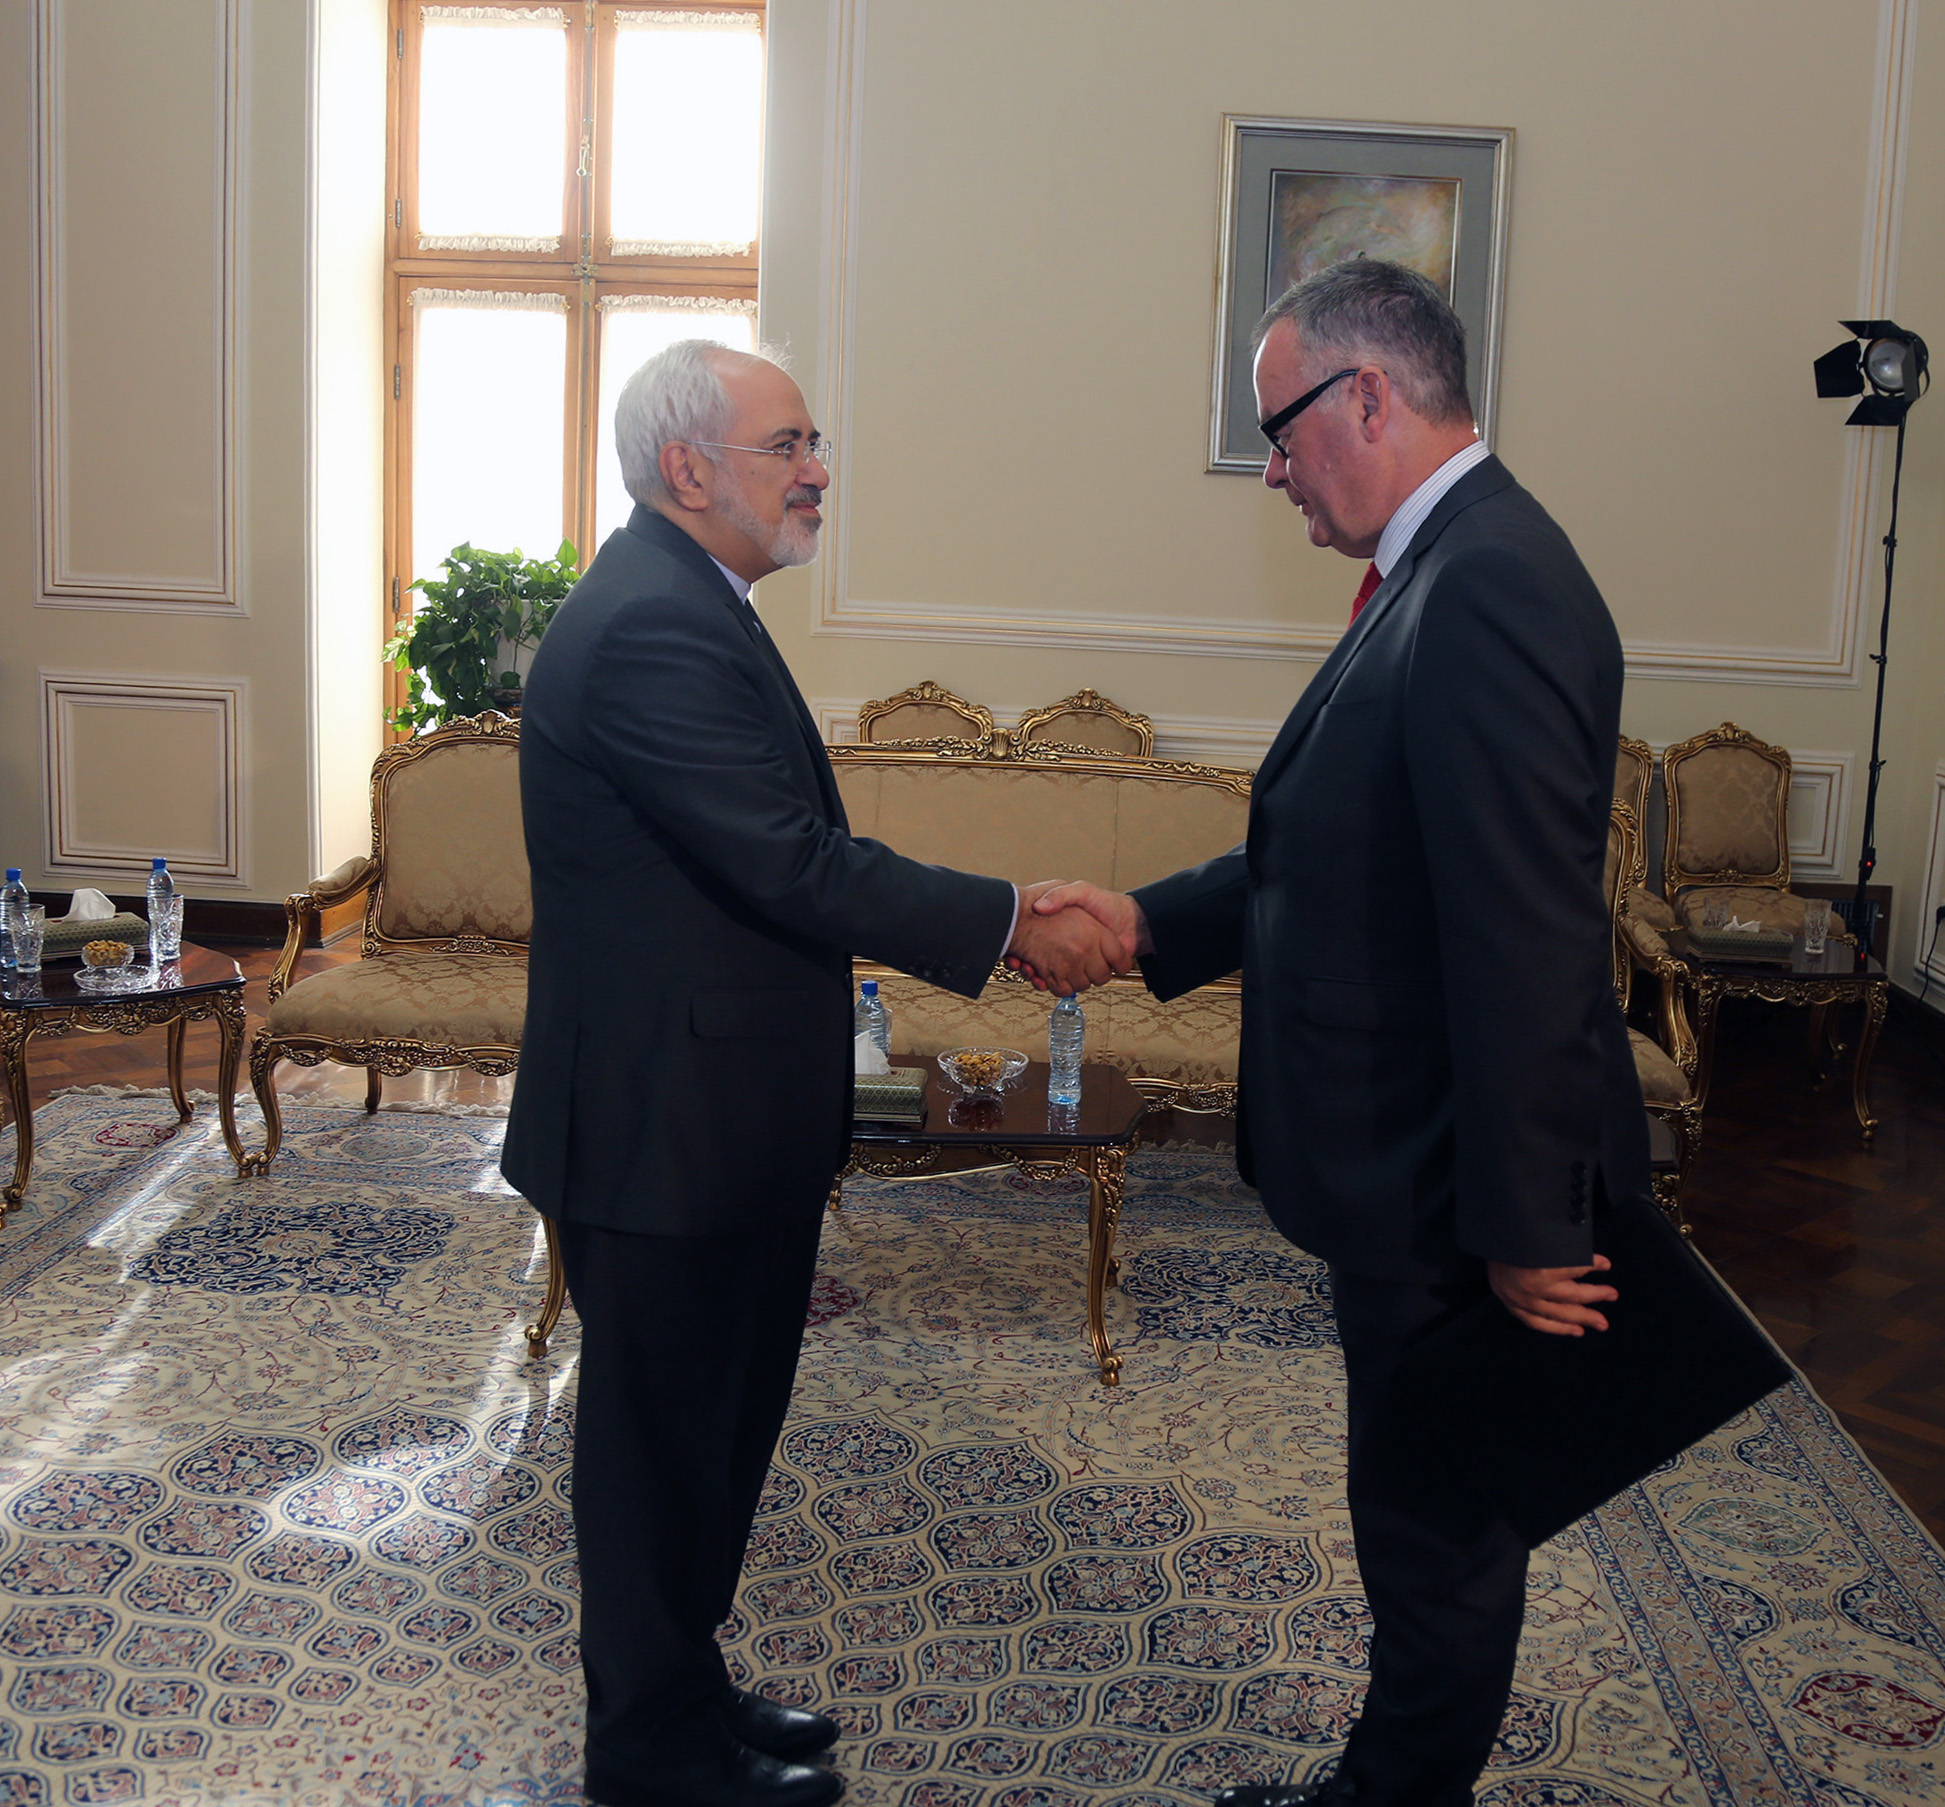  The new Irish ambassador to Iran presents his credentials to Zarif